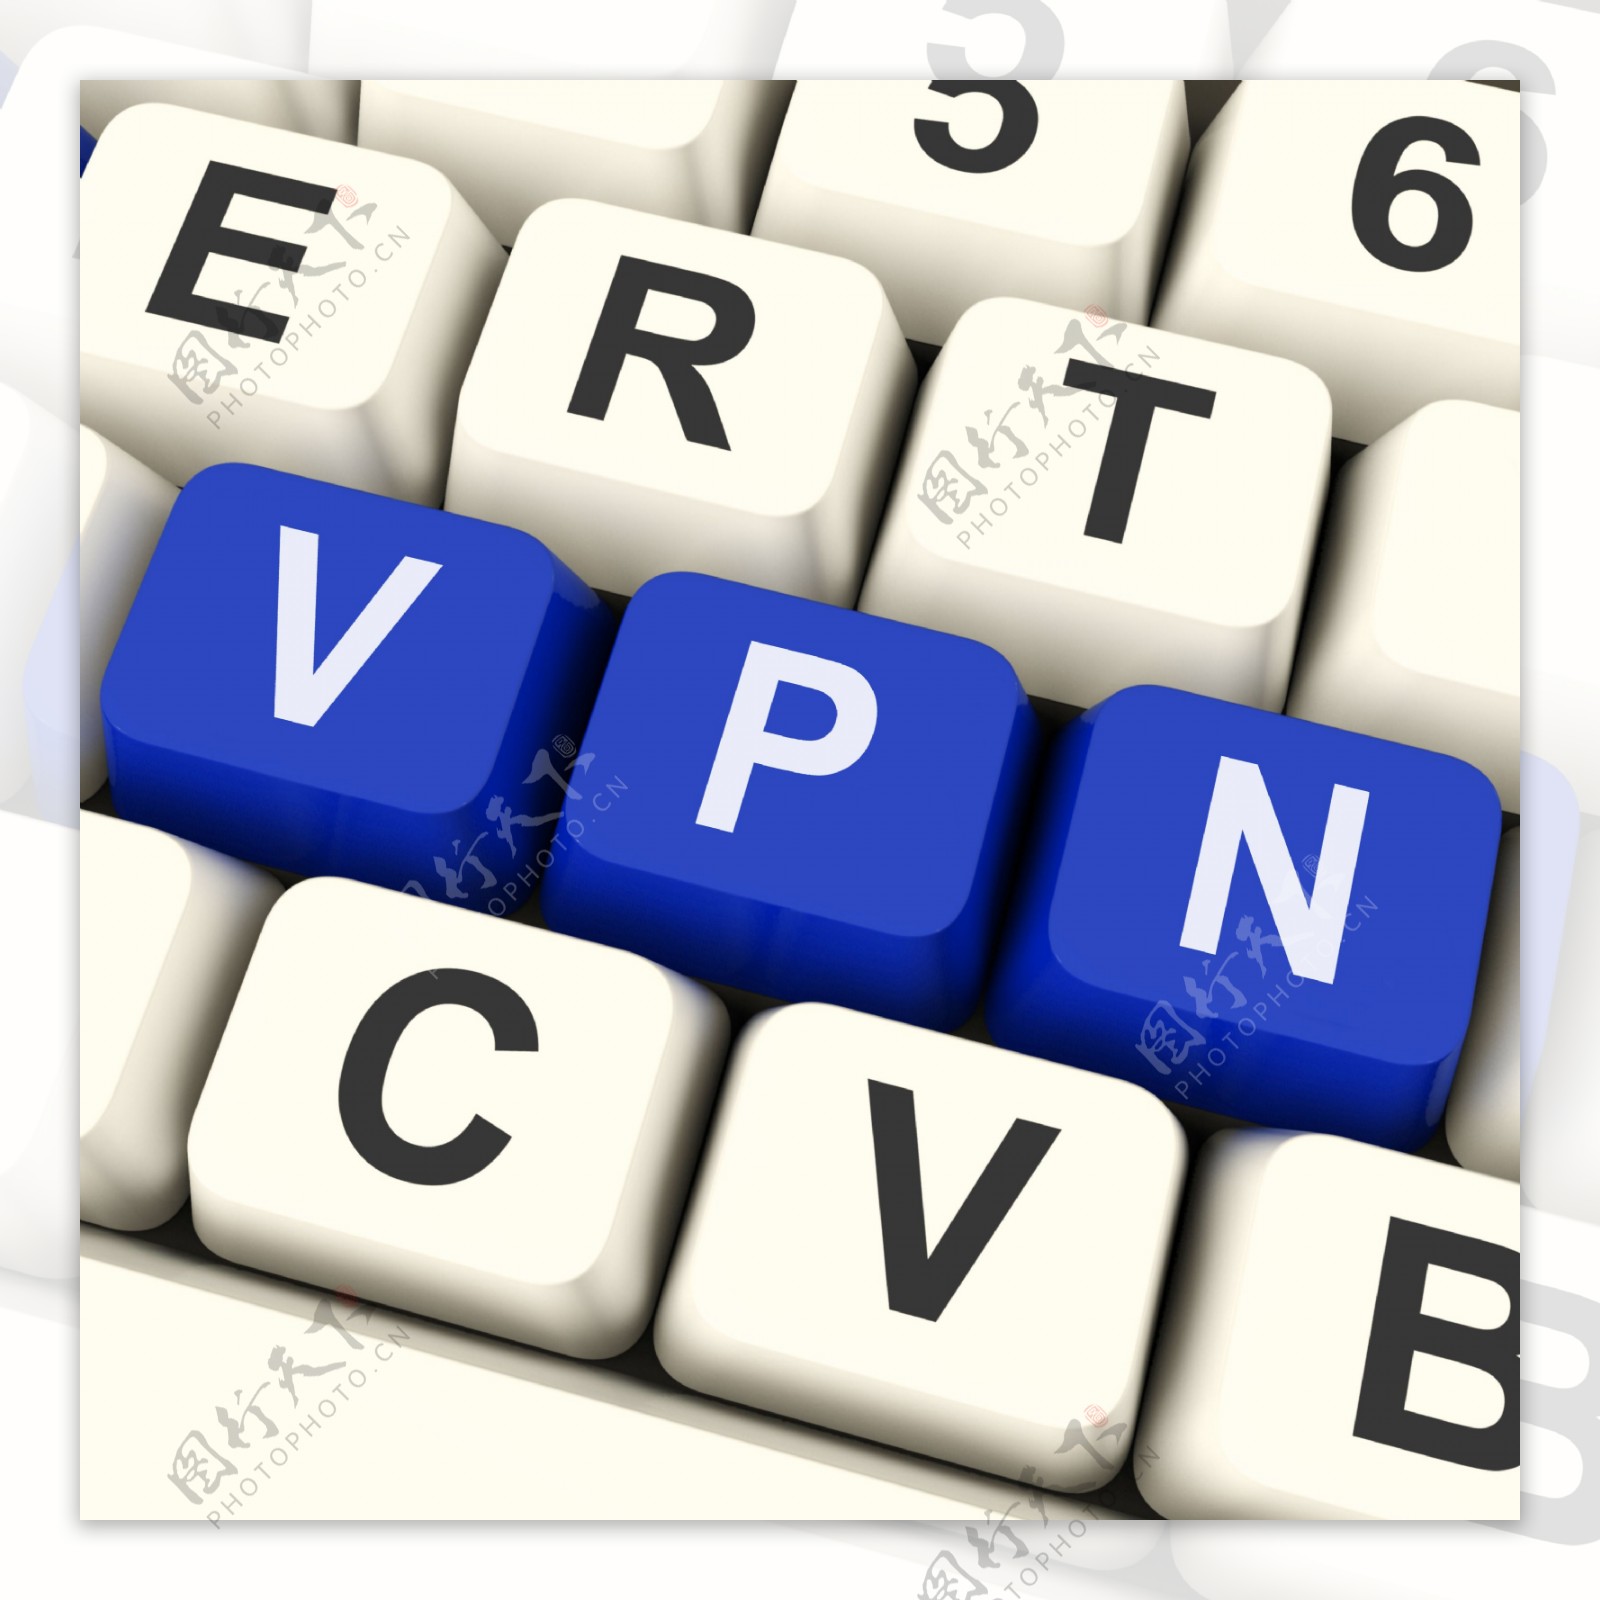 VPN虚拟专用网络或远程键显示